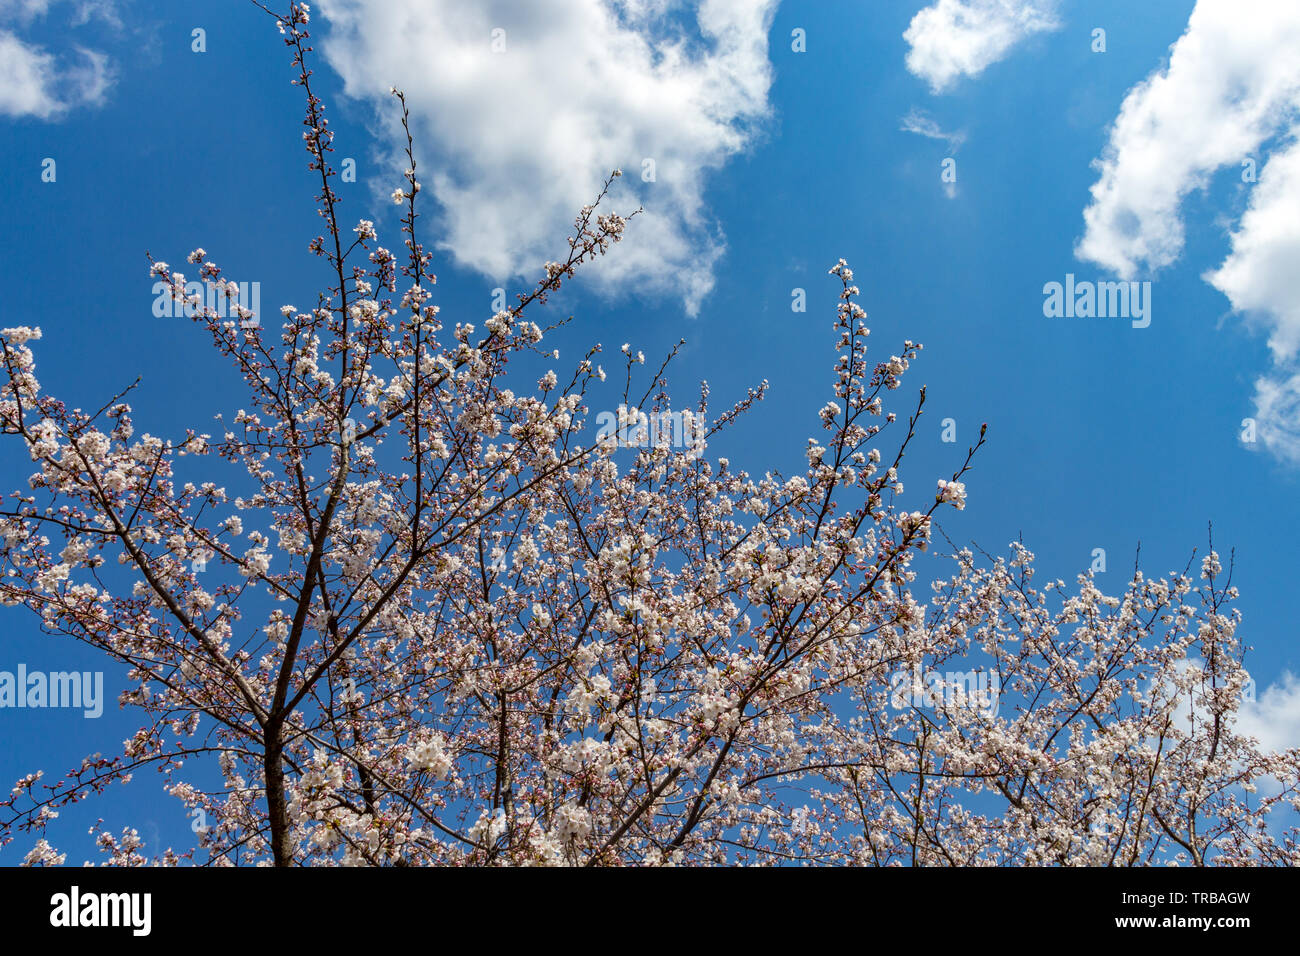 Cherry blossoms, or sakura, in full bloom in spring, Kanazawa, Ishikawa ...